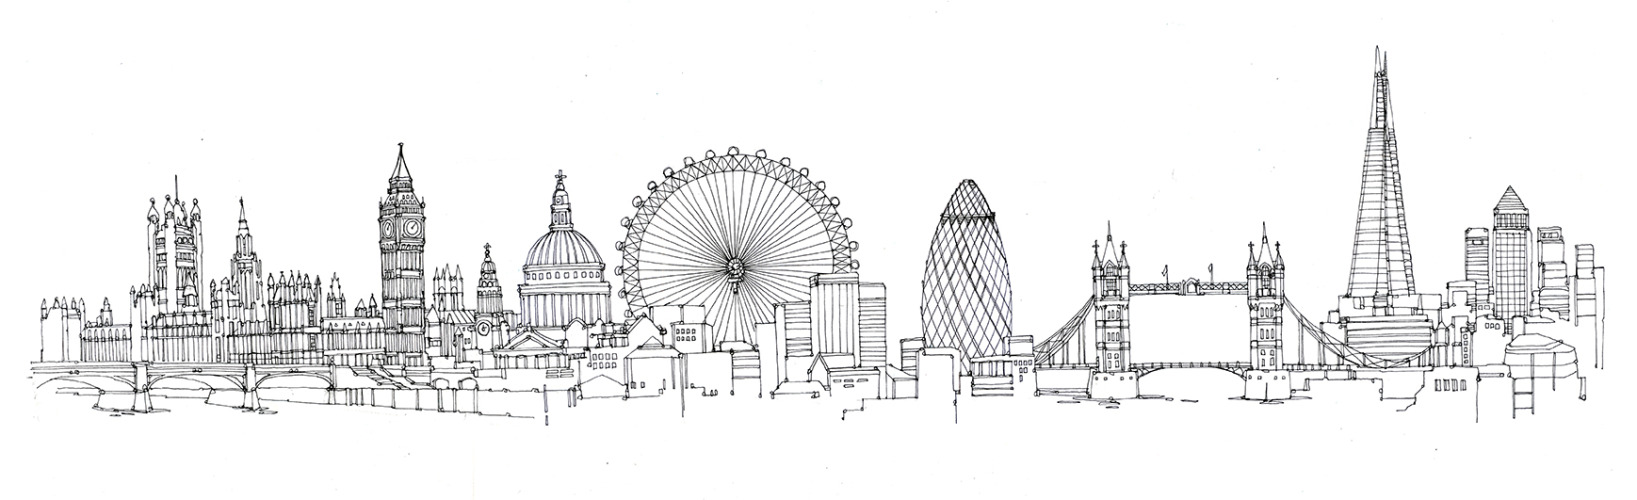 London Skyline Drawing - Gallery